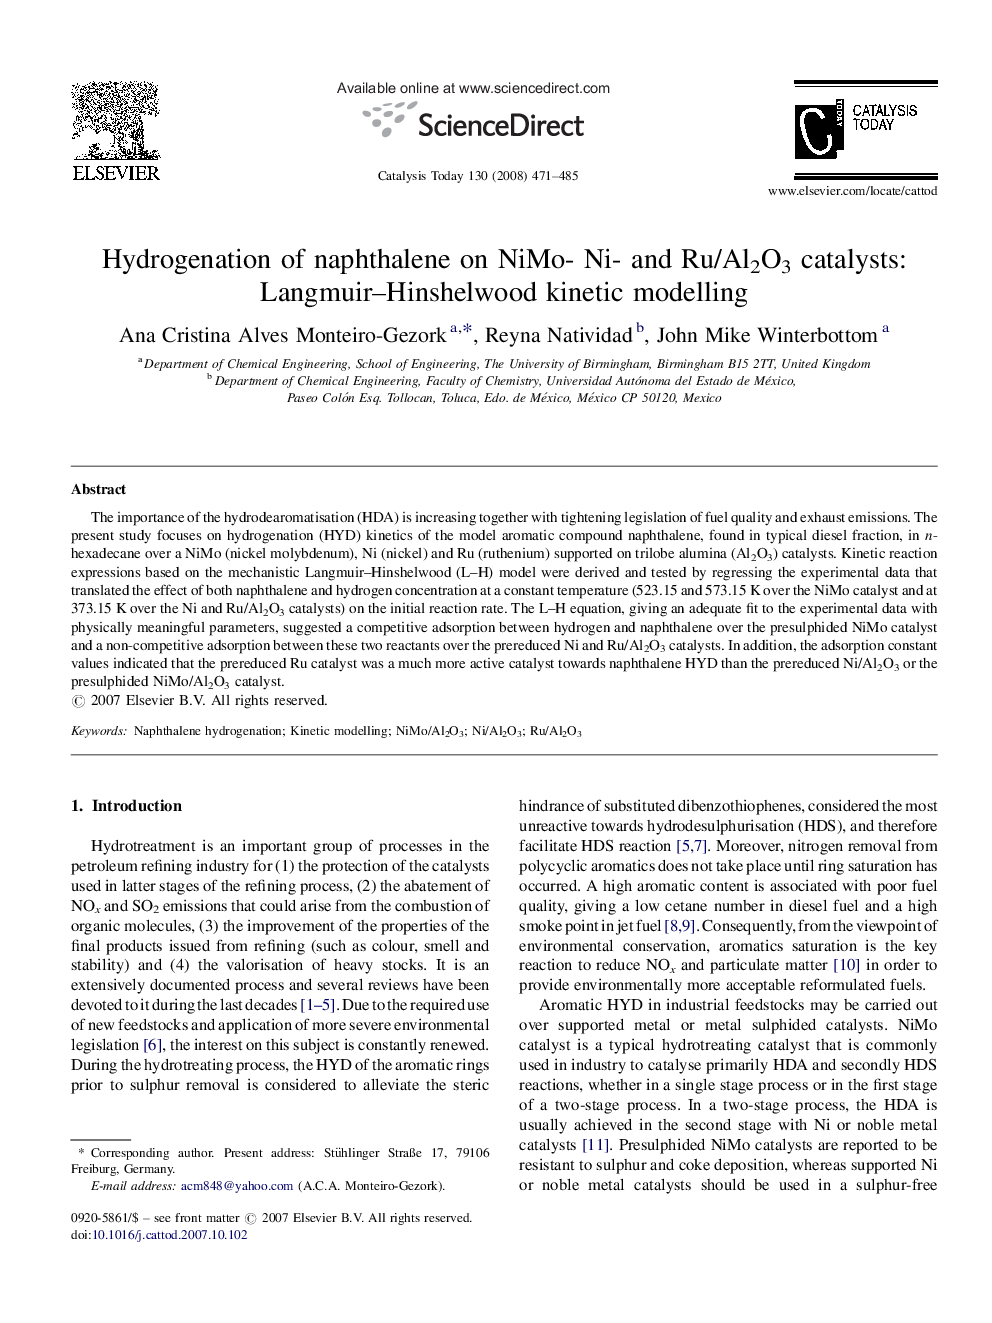 Hydrogenation of naphthalene on NiMo- Ni- and Ru/Al2O3 catalysts: Langmuir–Hinshelwood kinetic modelling